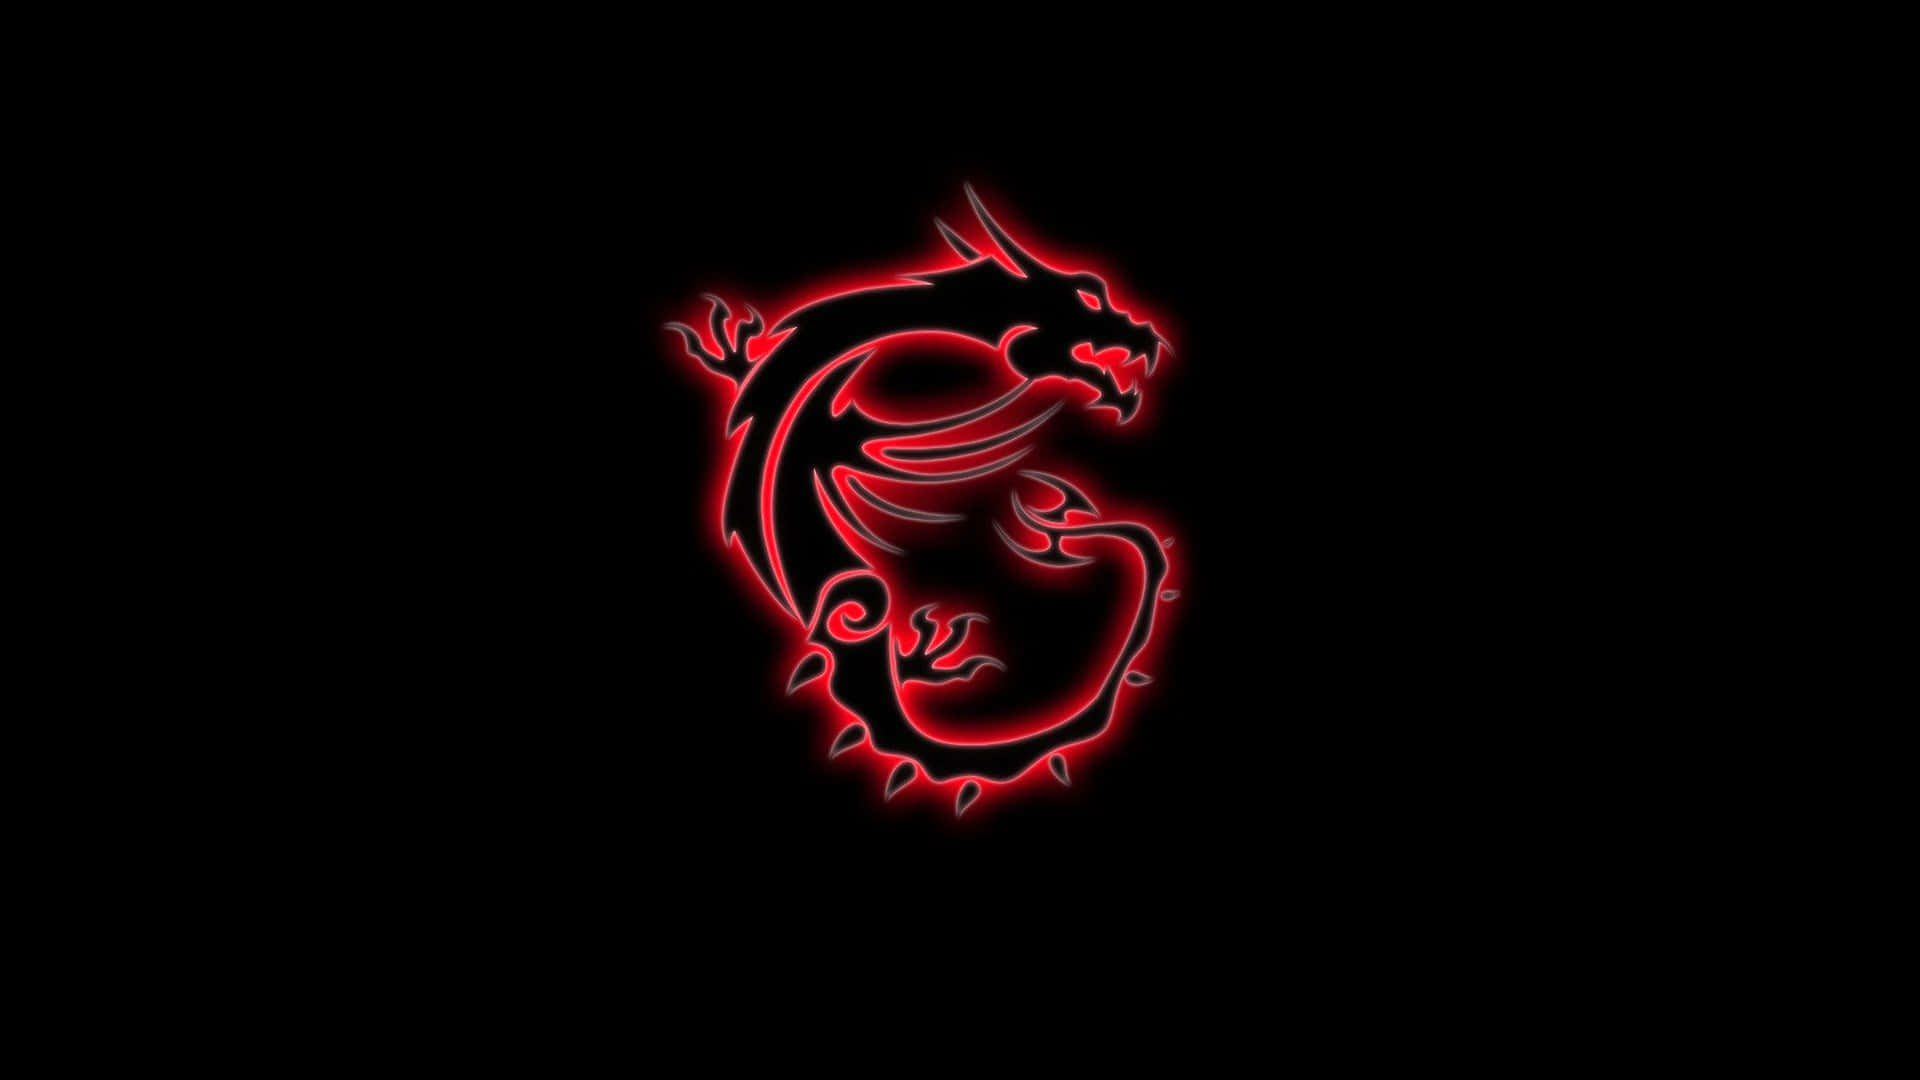 Red Gaming Msi Dragon Wallpaper